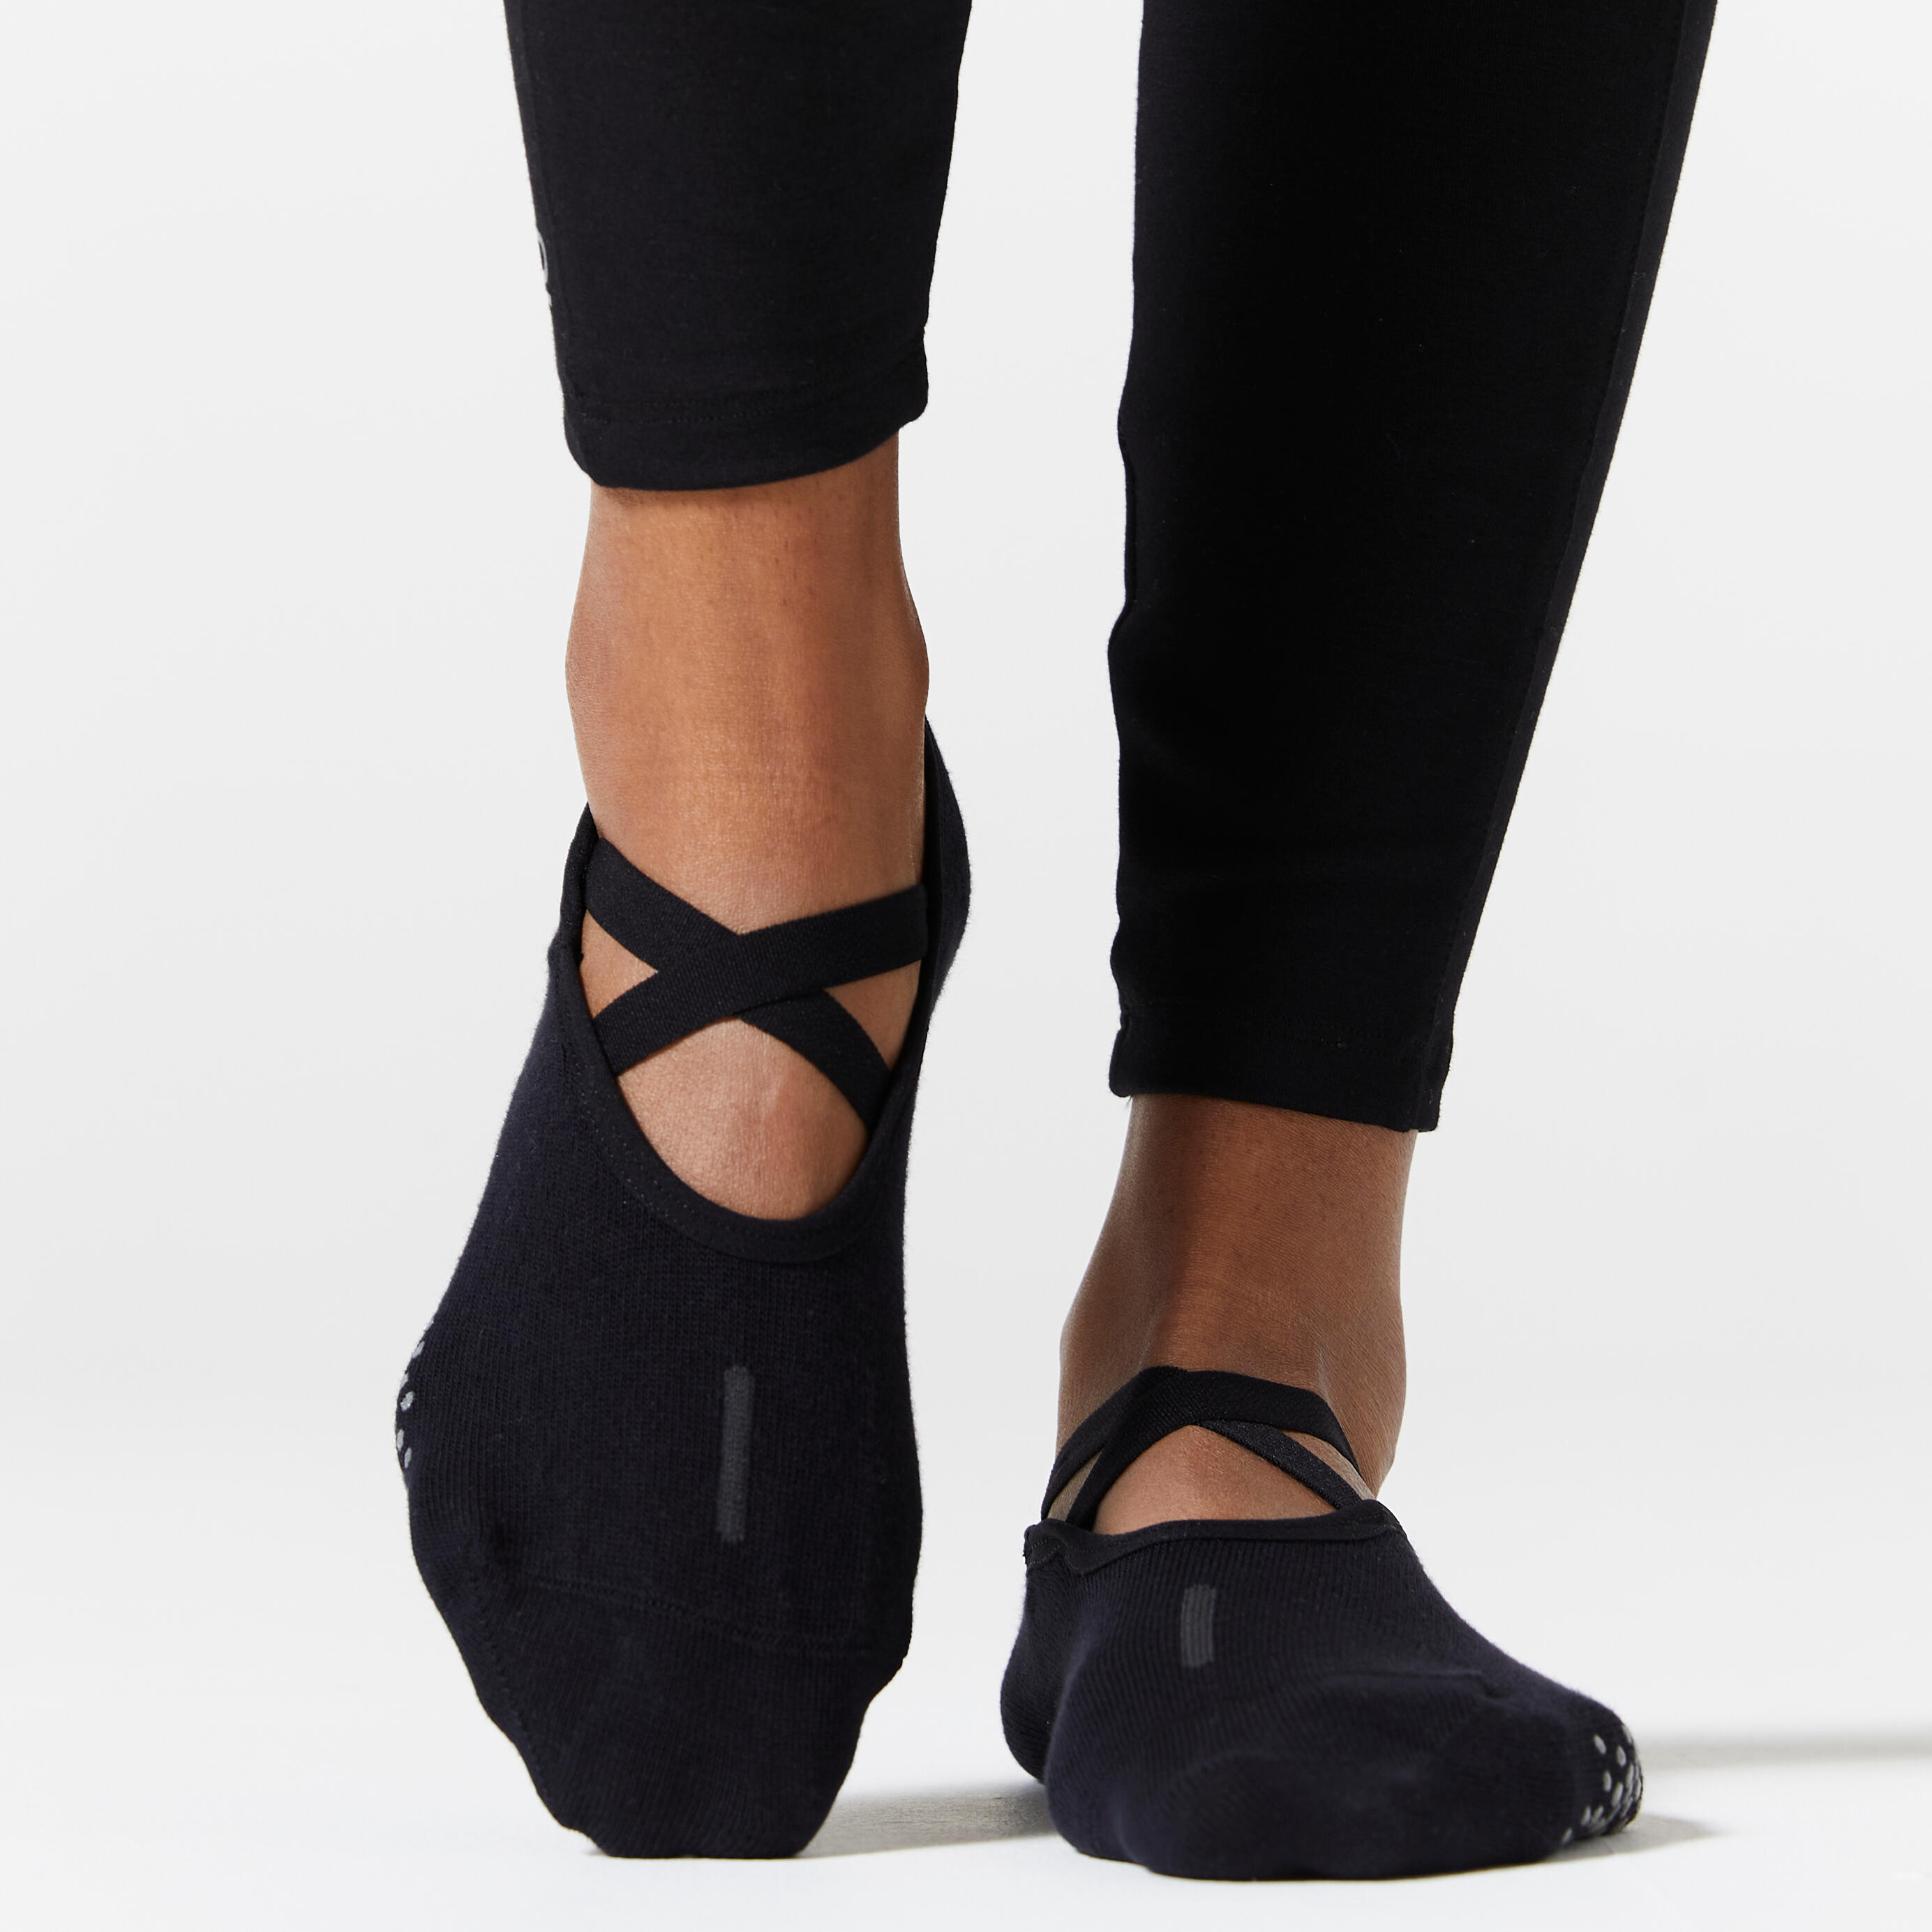 STRAUSS Yoga Socks,for women (Black) – StraussSport